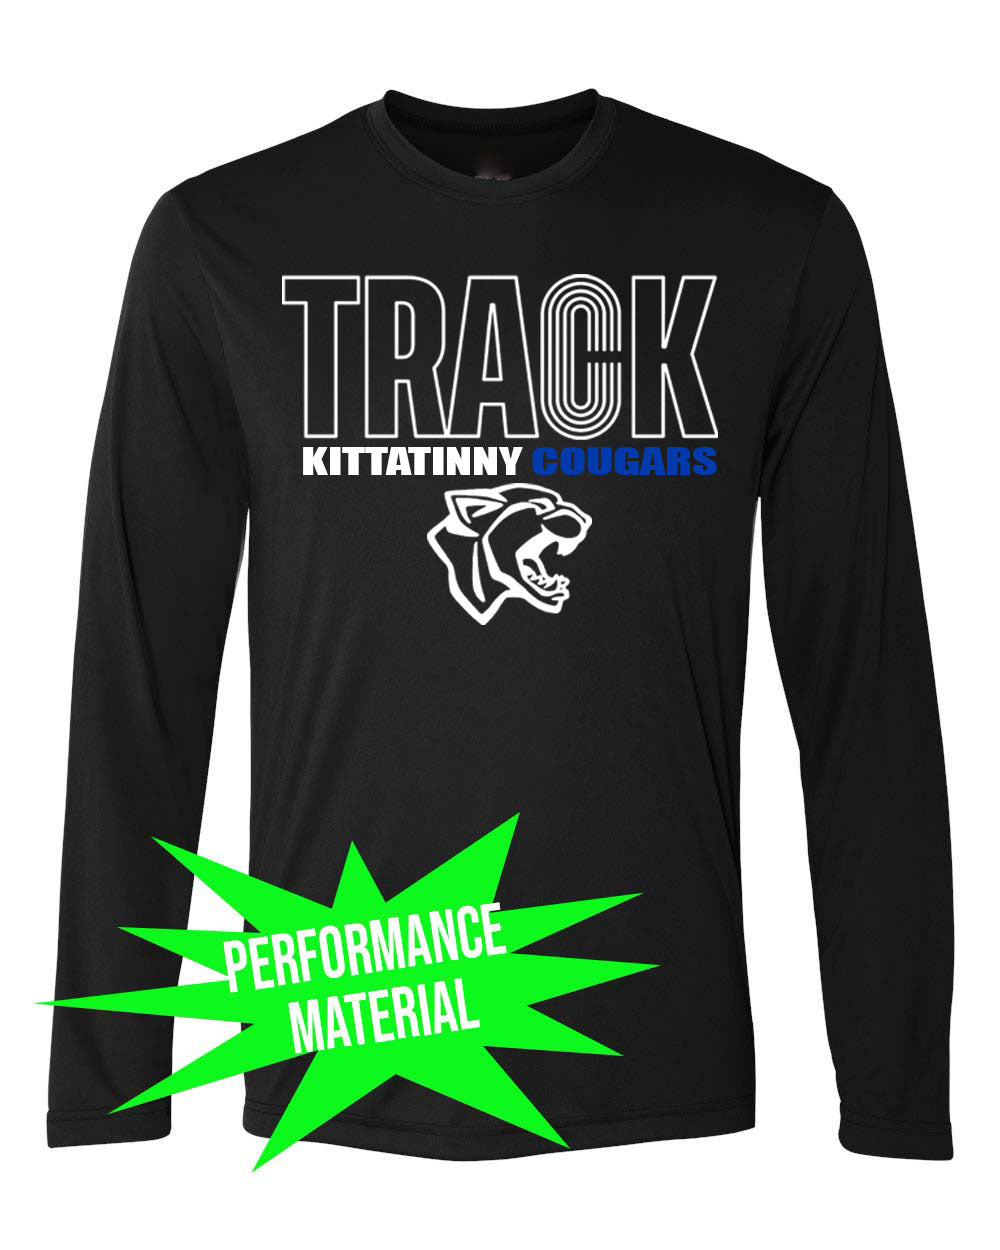 Kittatinny Track Performance Material Design 1 Long Sleeve Shirt